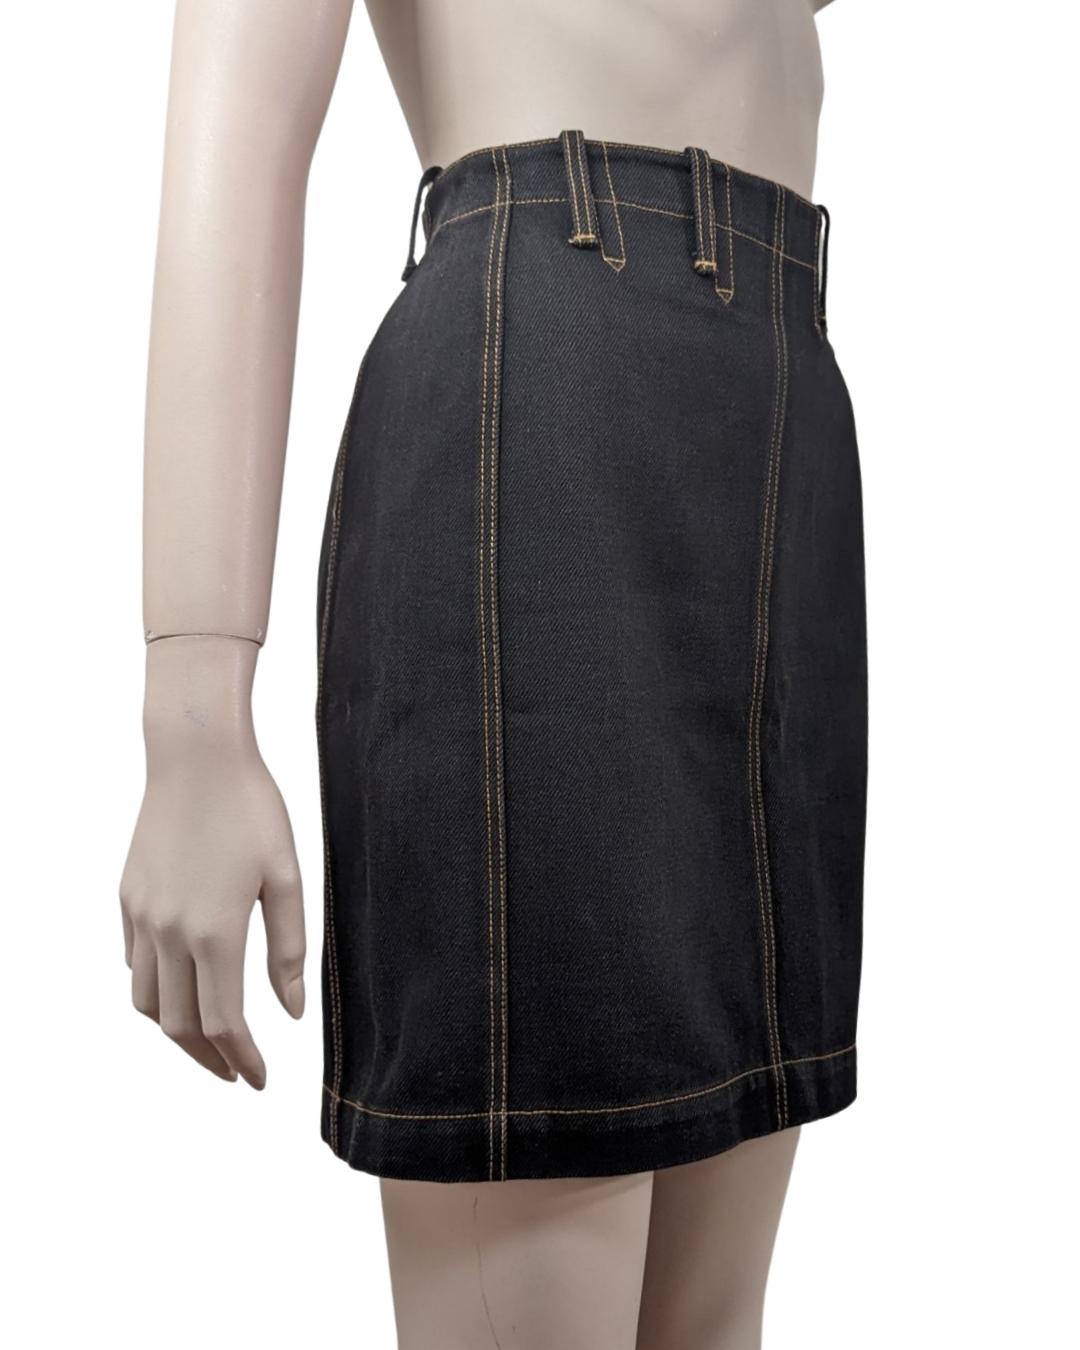 Azzedine Alaïa S/S 1991 High Waist Lace-up Denim Skirt In Excellent Condition In GOUVIEUX, FR